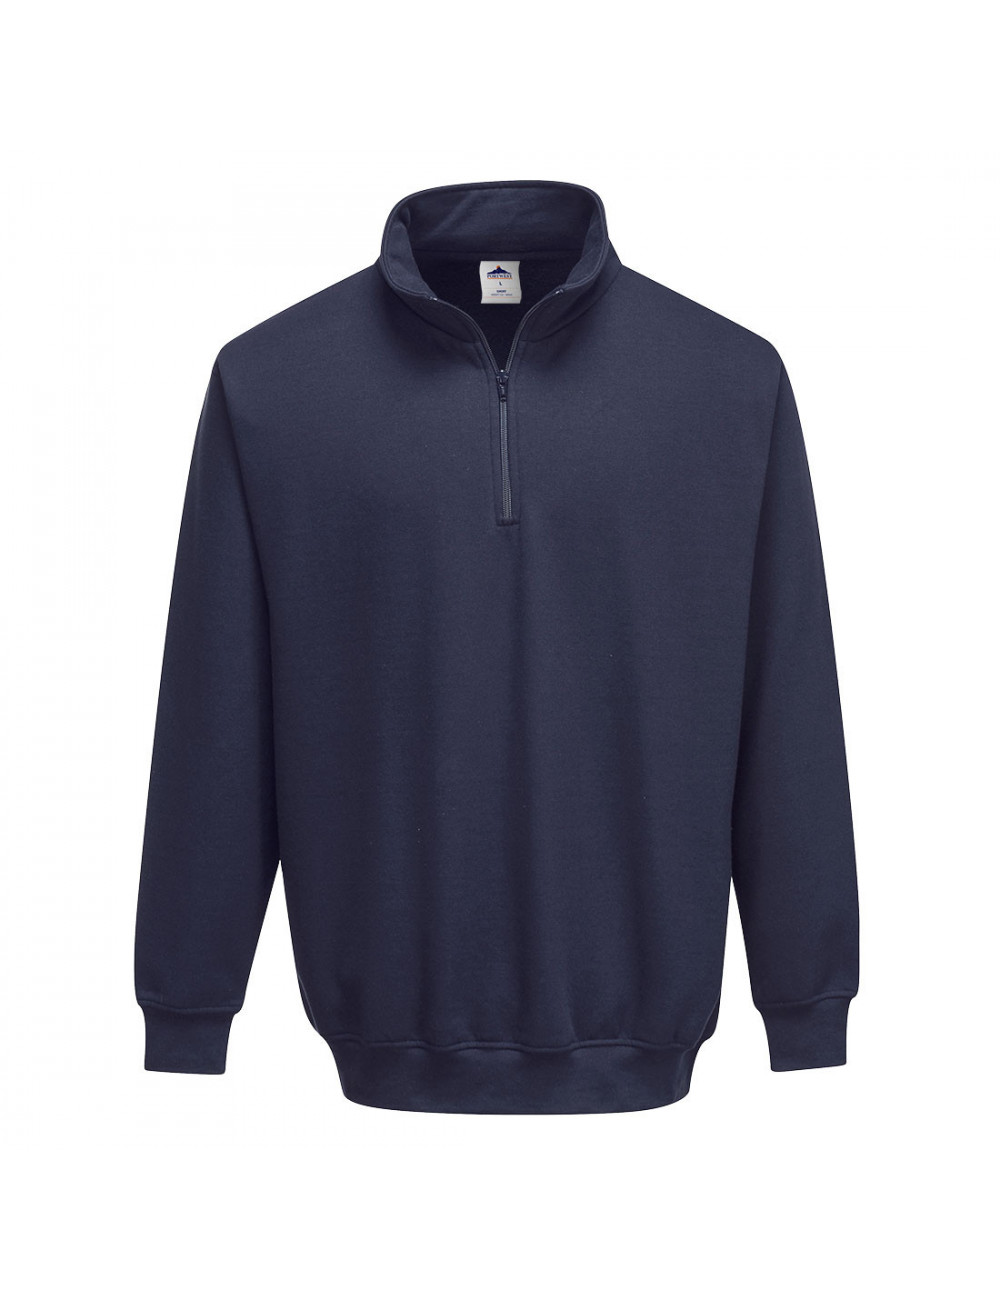 Sorrento zipper sweatshirt navy blue Portwest